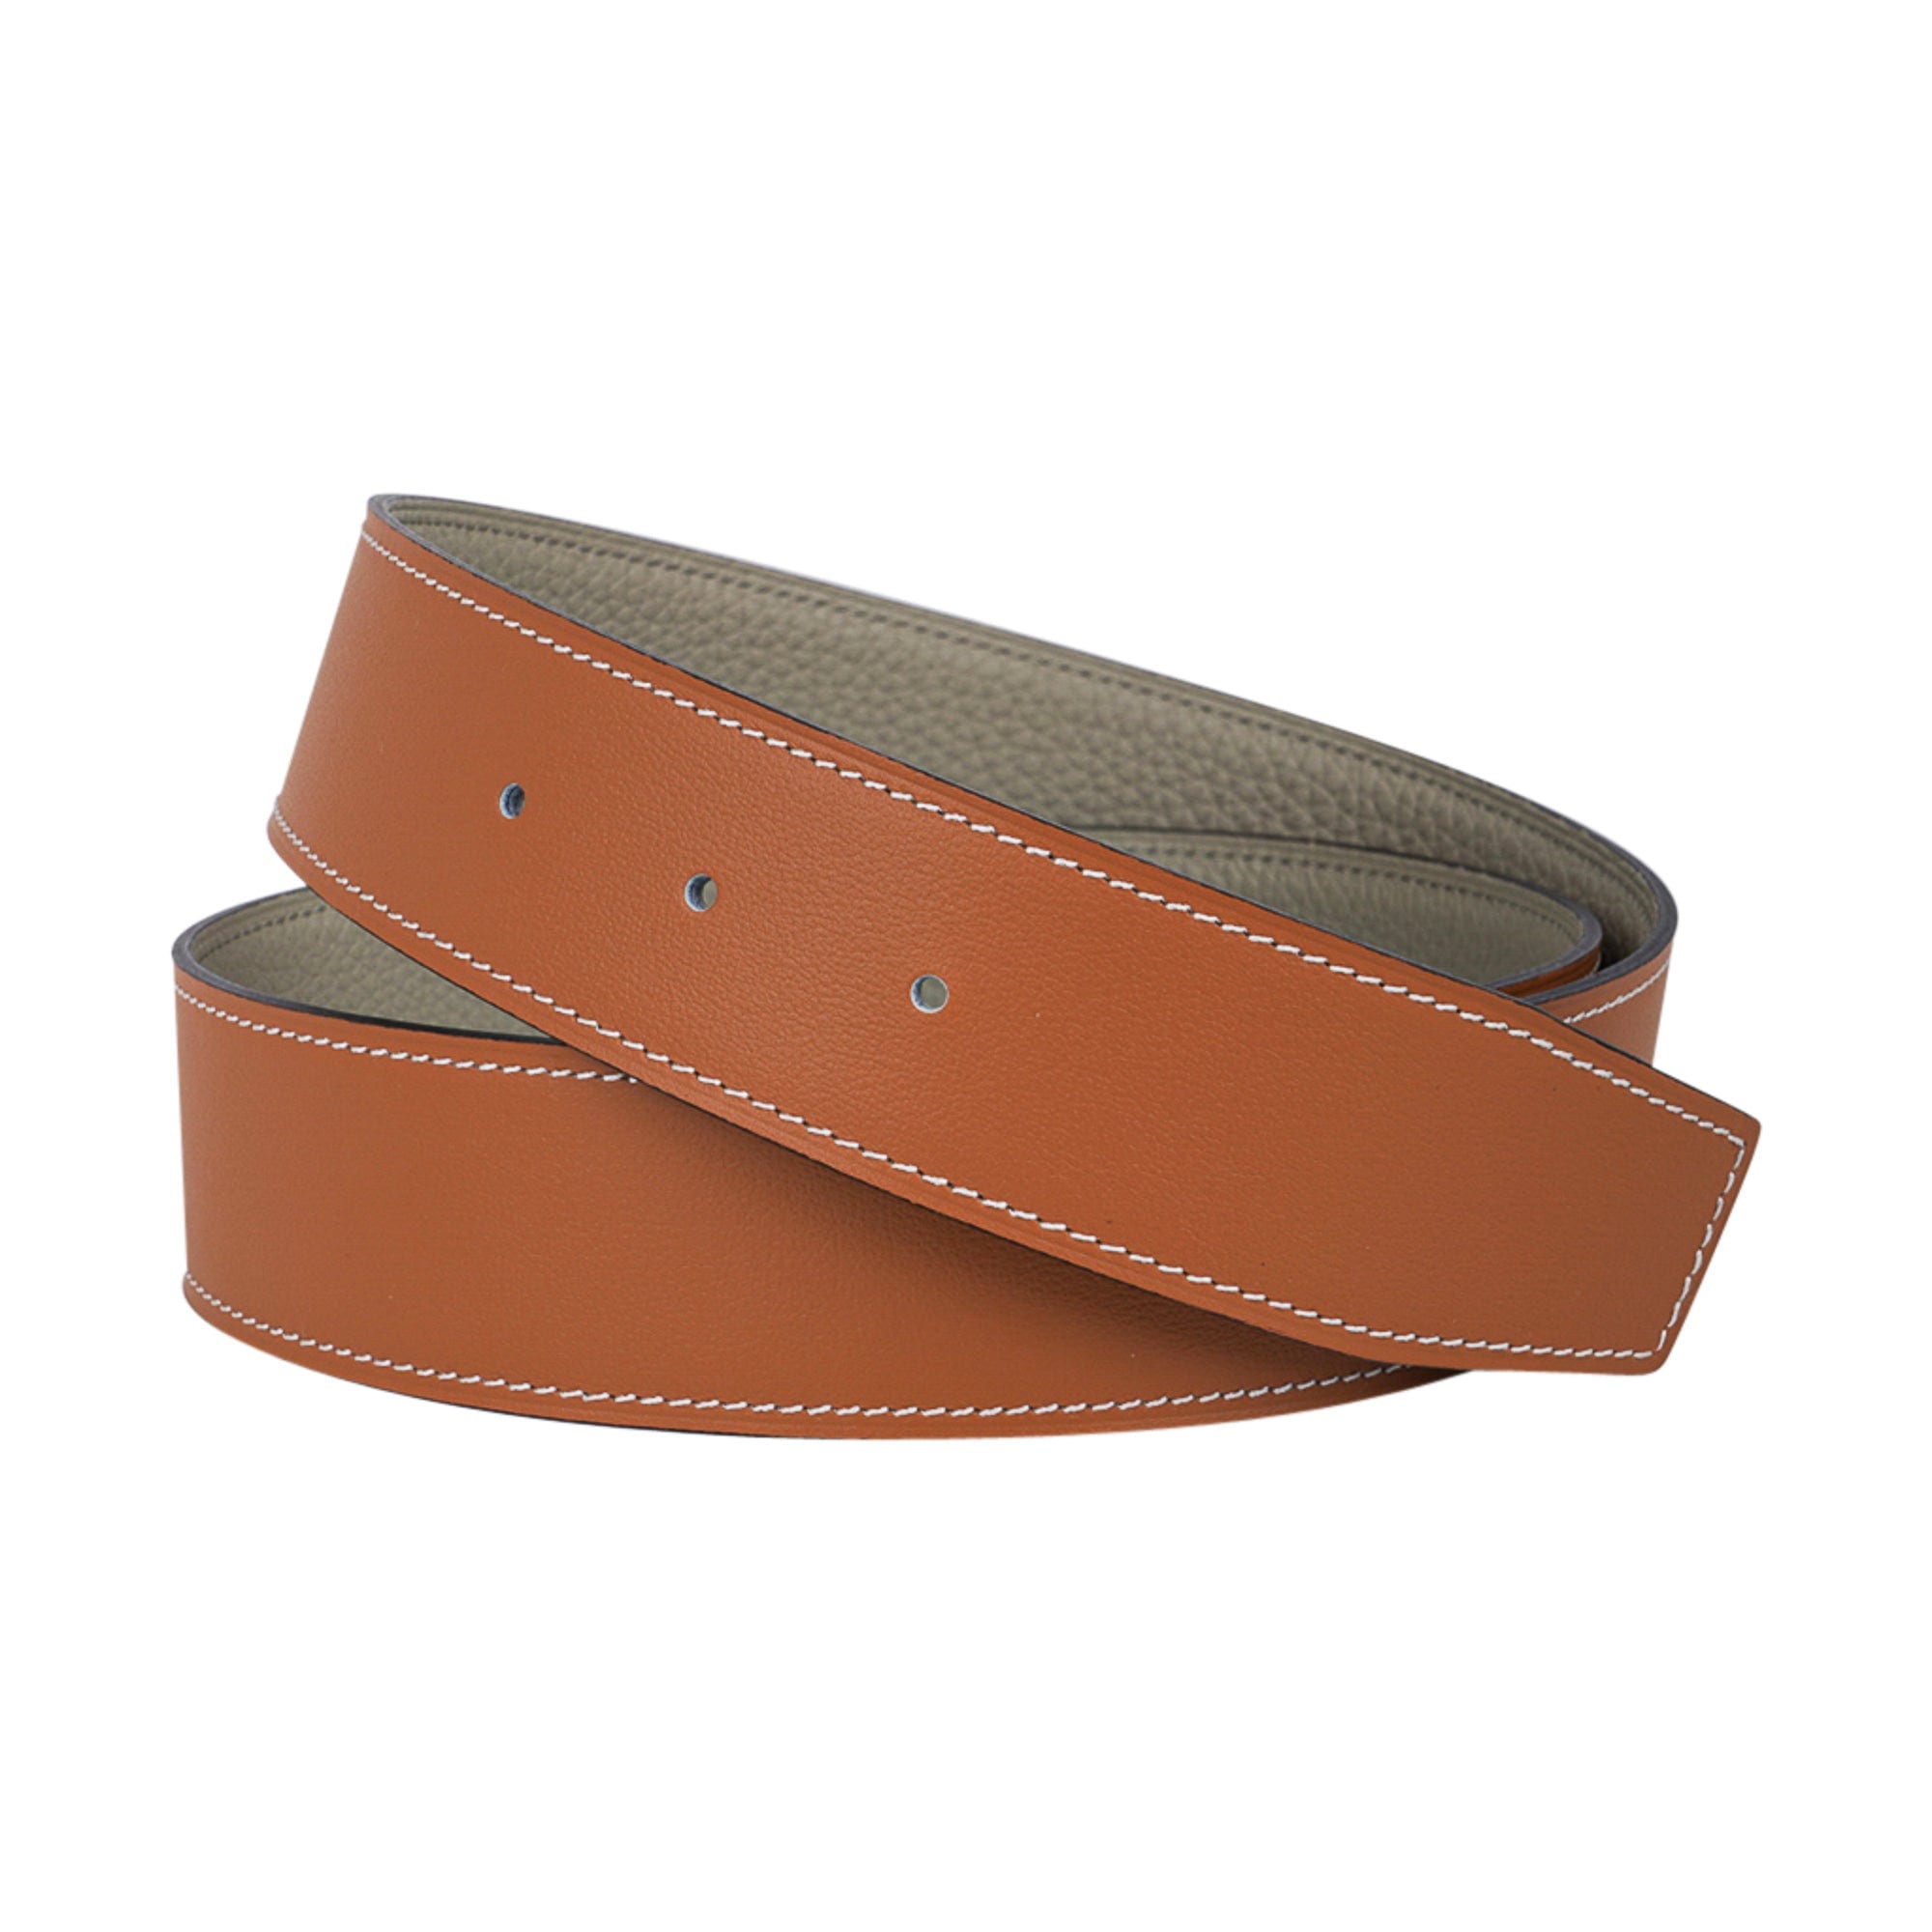 Constance belt buckle & Reversible leather strap 38 mm